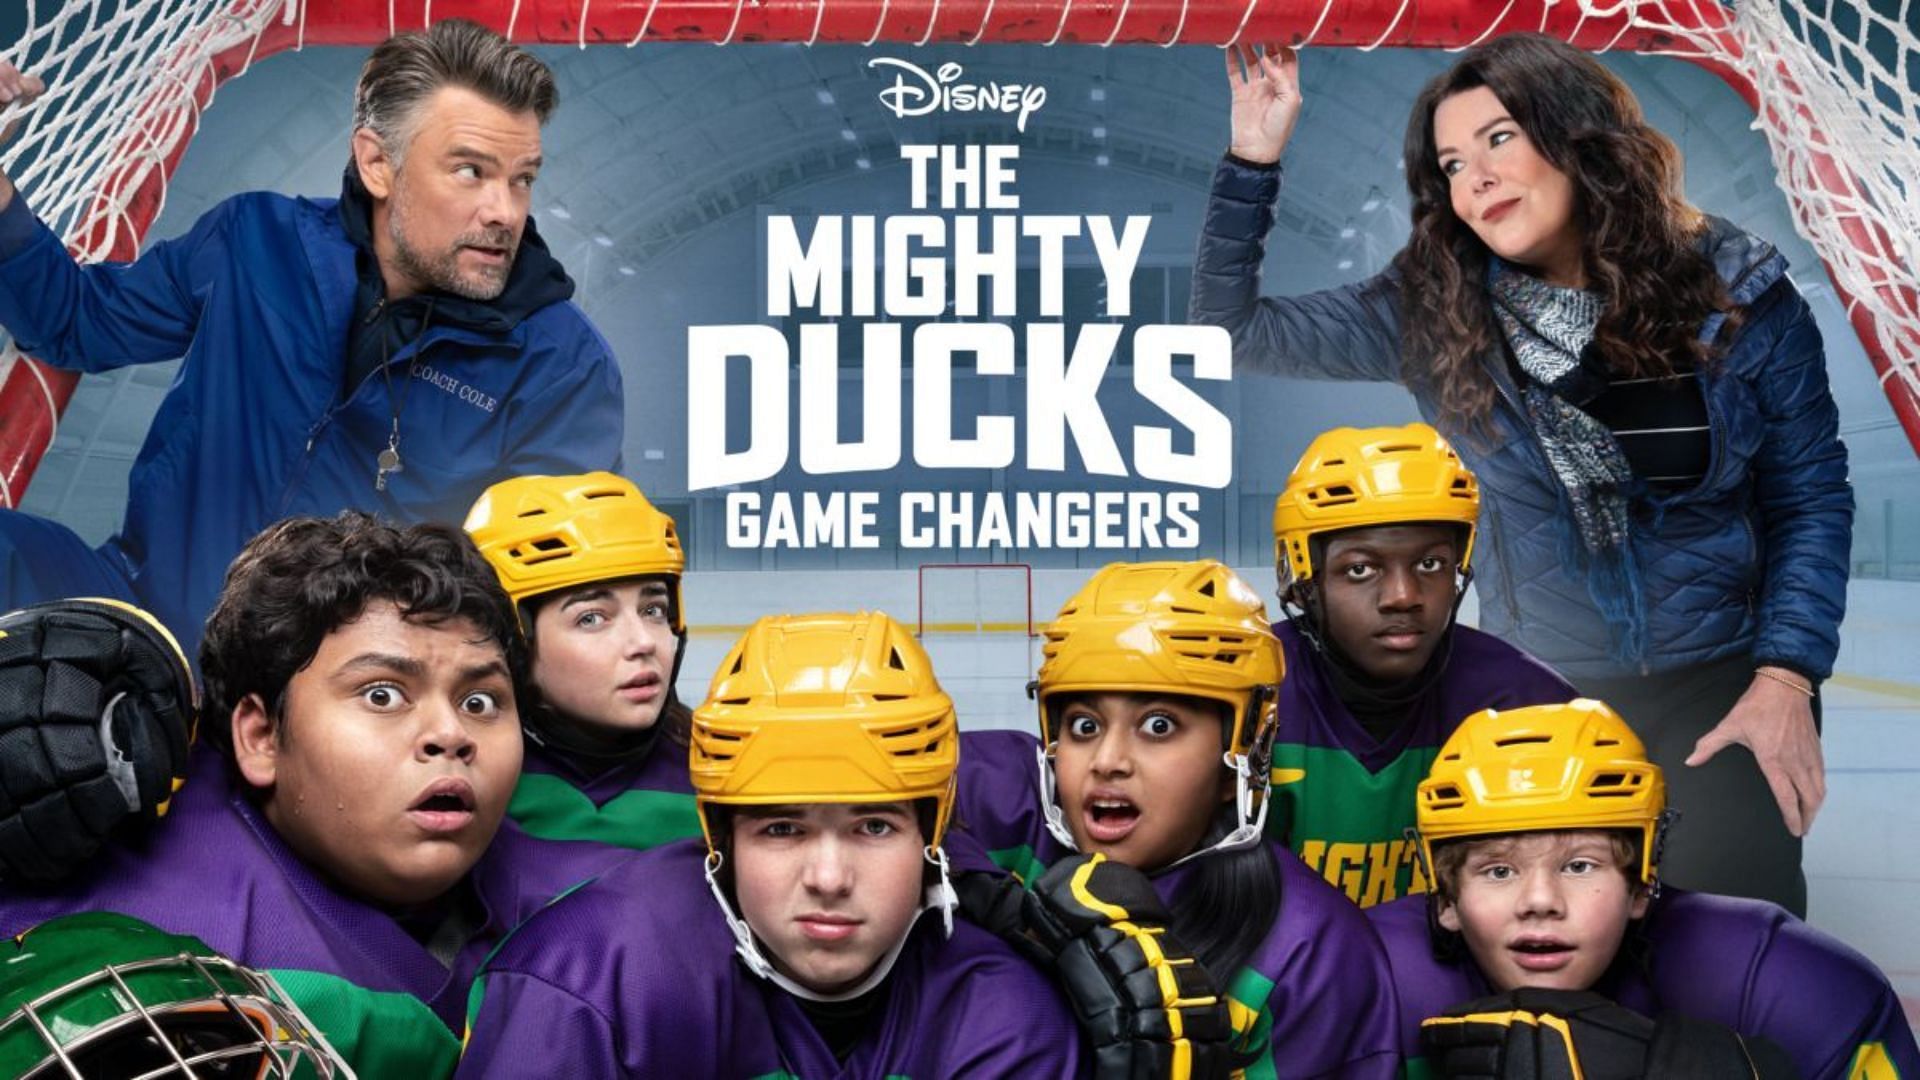 Emilio Estevez on why he left The Mighty Ducks: Game Changers